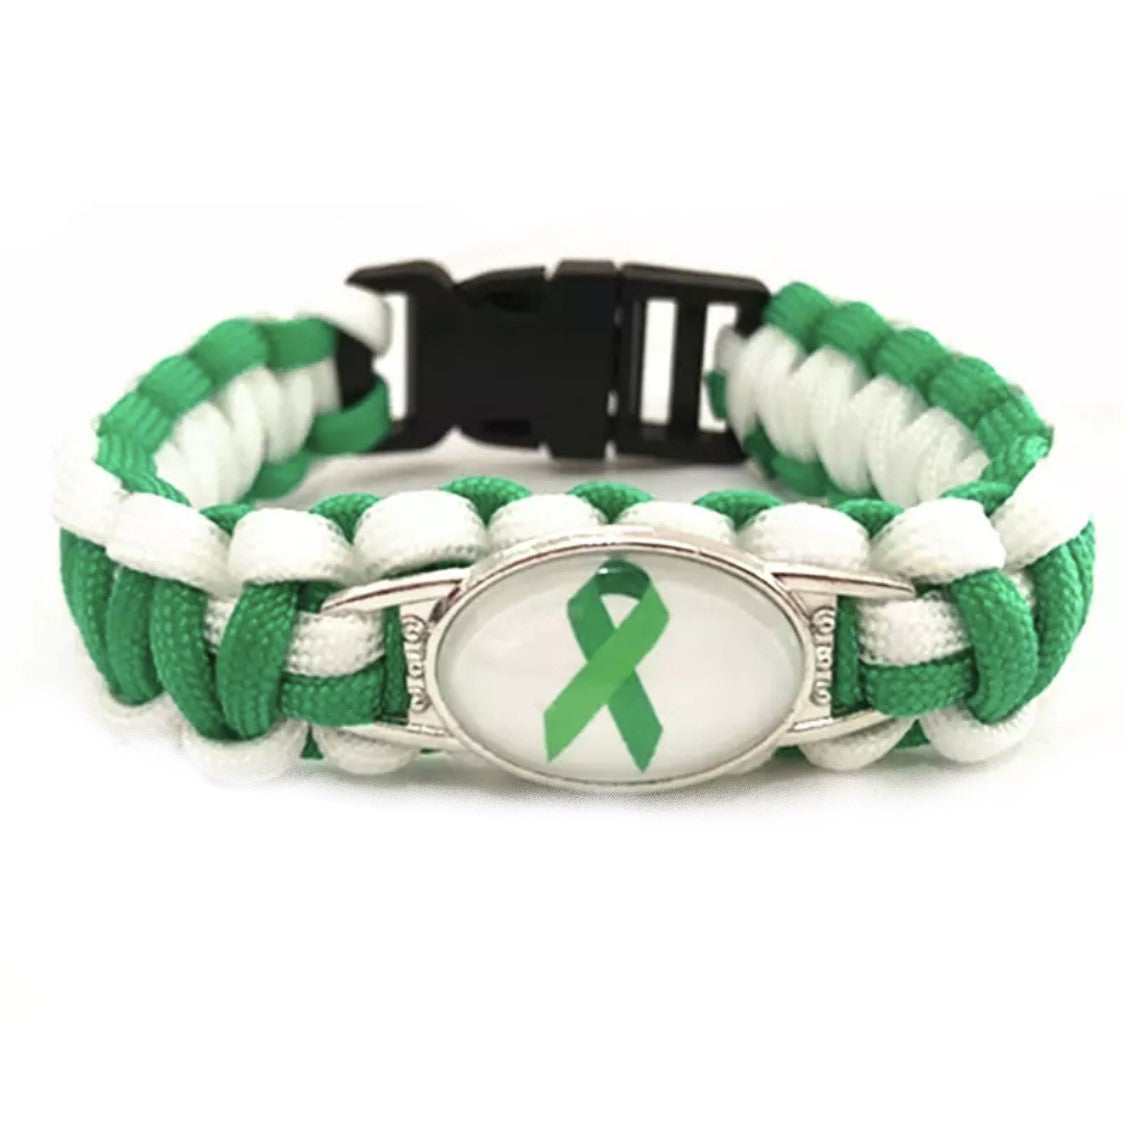 Cancer Paracord Bracelet